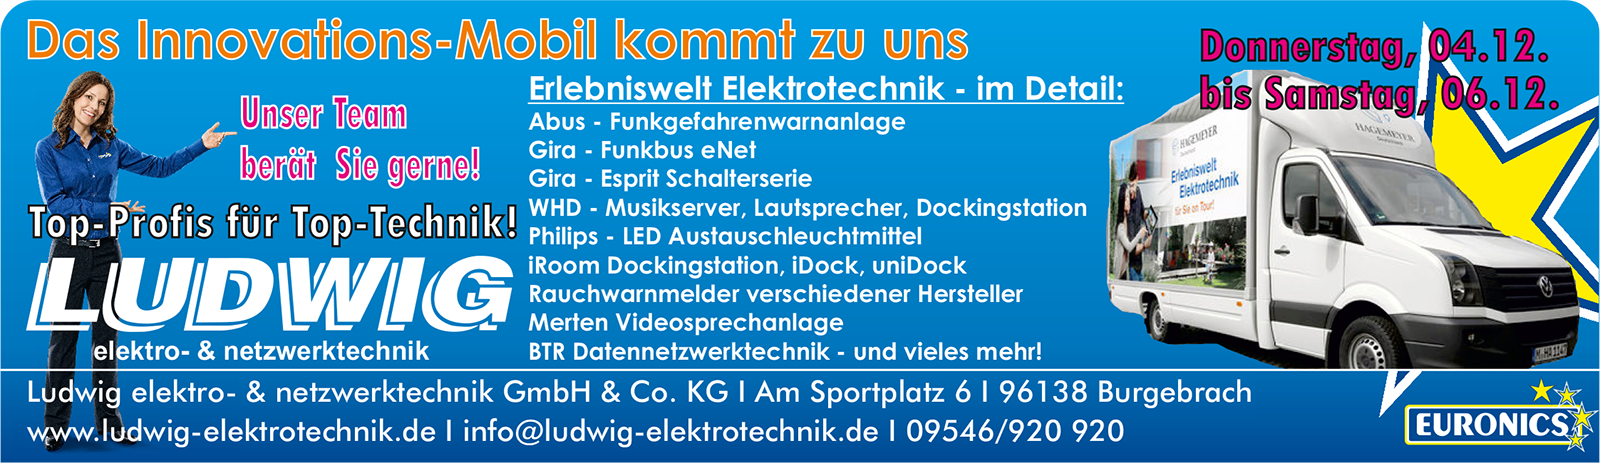 Ludwig Elektrotechnik: Anzeige Innovationsmobil 2014